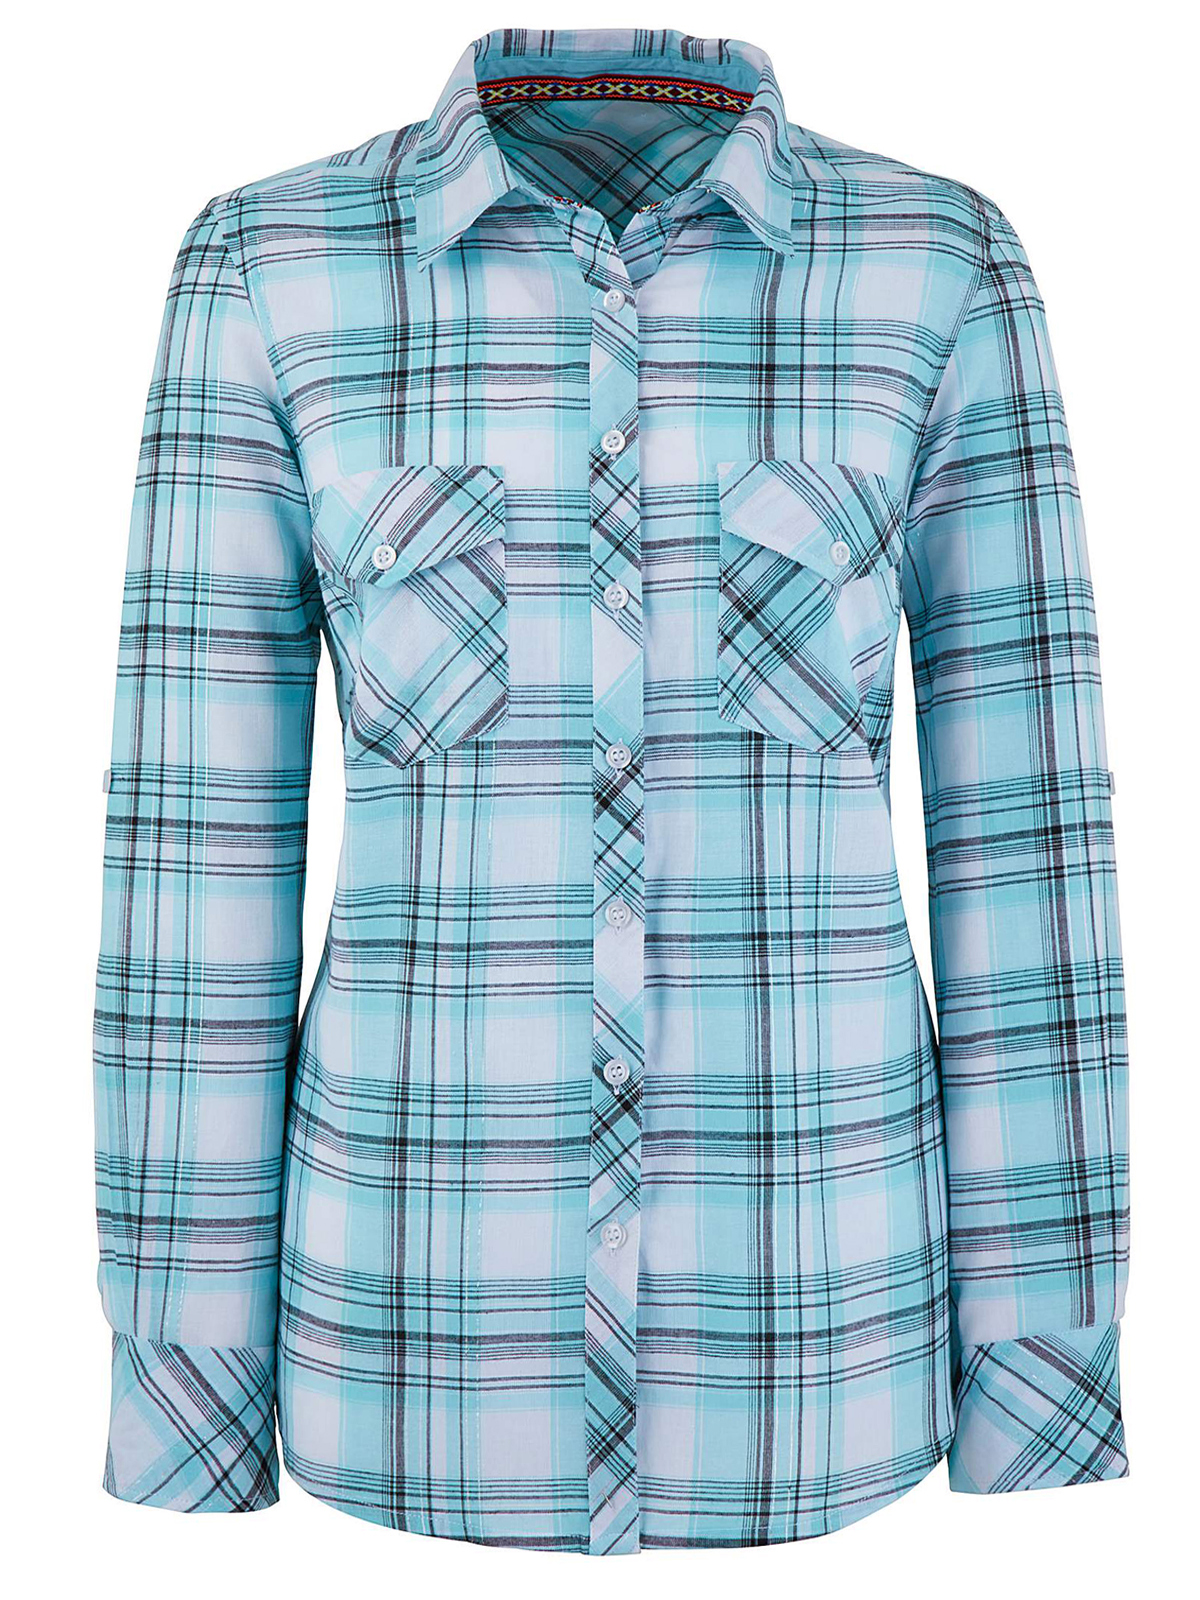 Wholesale Plus Size Clothing from Marisota - - Mar1sota BLUE Pure ...